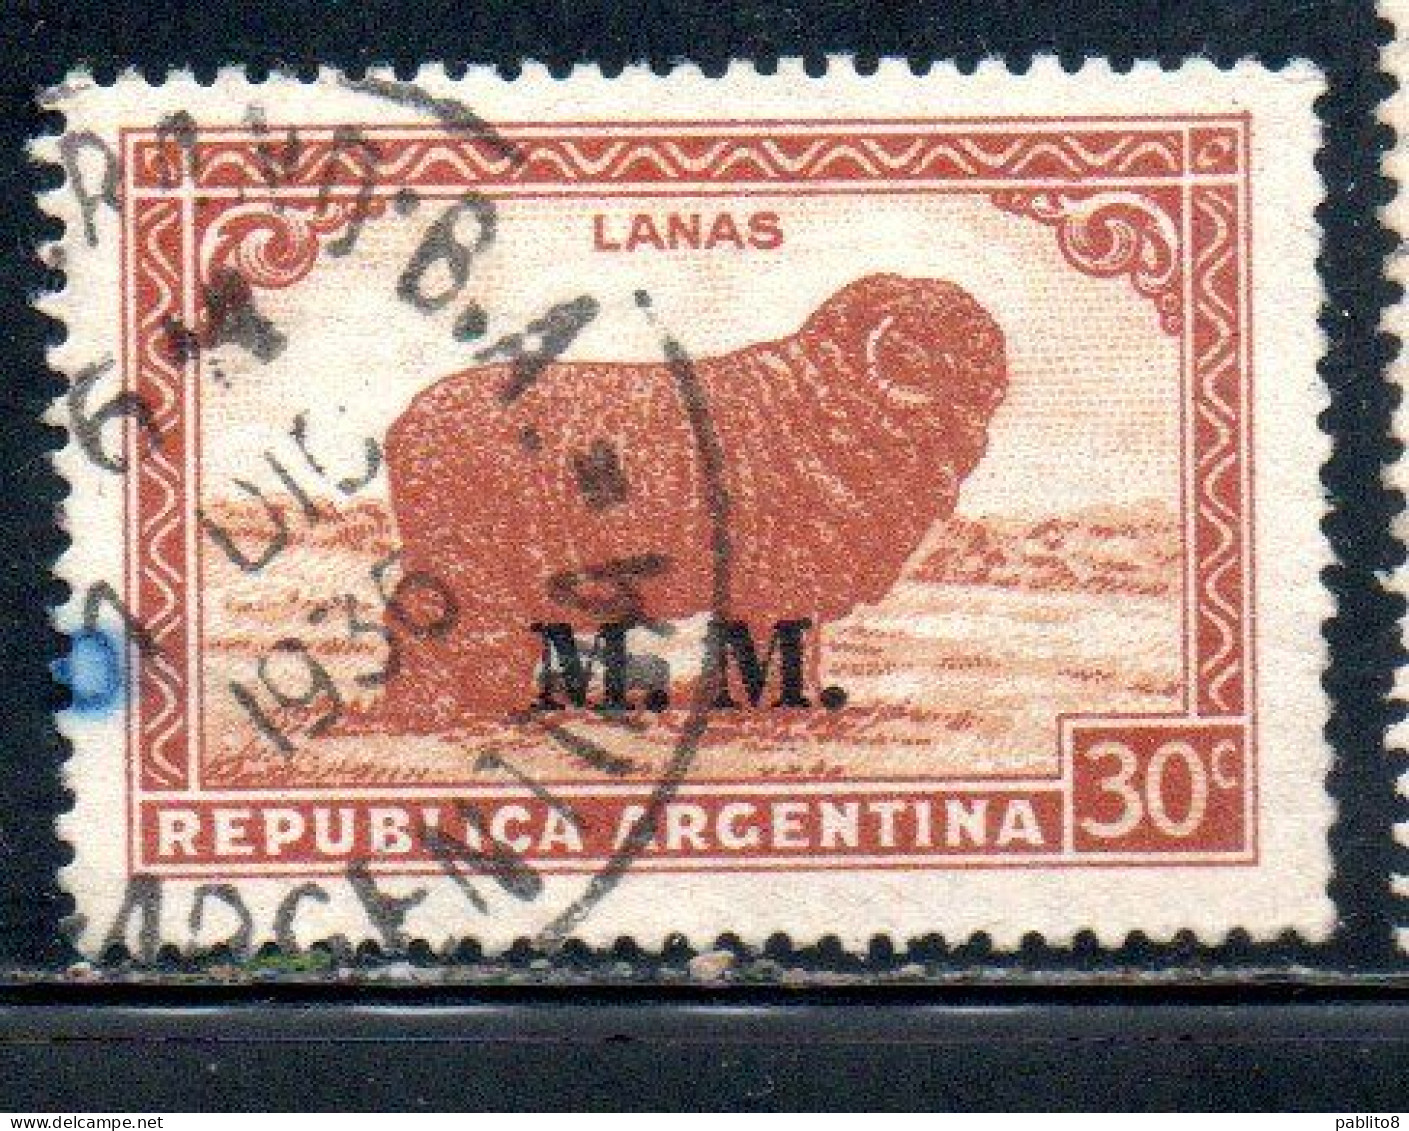 ARGENTINA 1935 1937 OFFICIAL DEPARTMENT STAMP OVERPRINTED M.M. MINISTRY OF MARINE MM 30c USED USADO - Dienstmarken